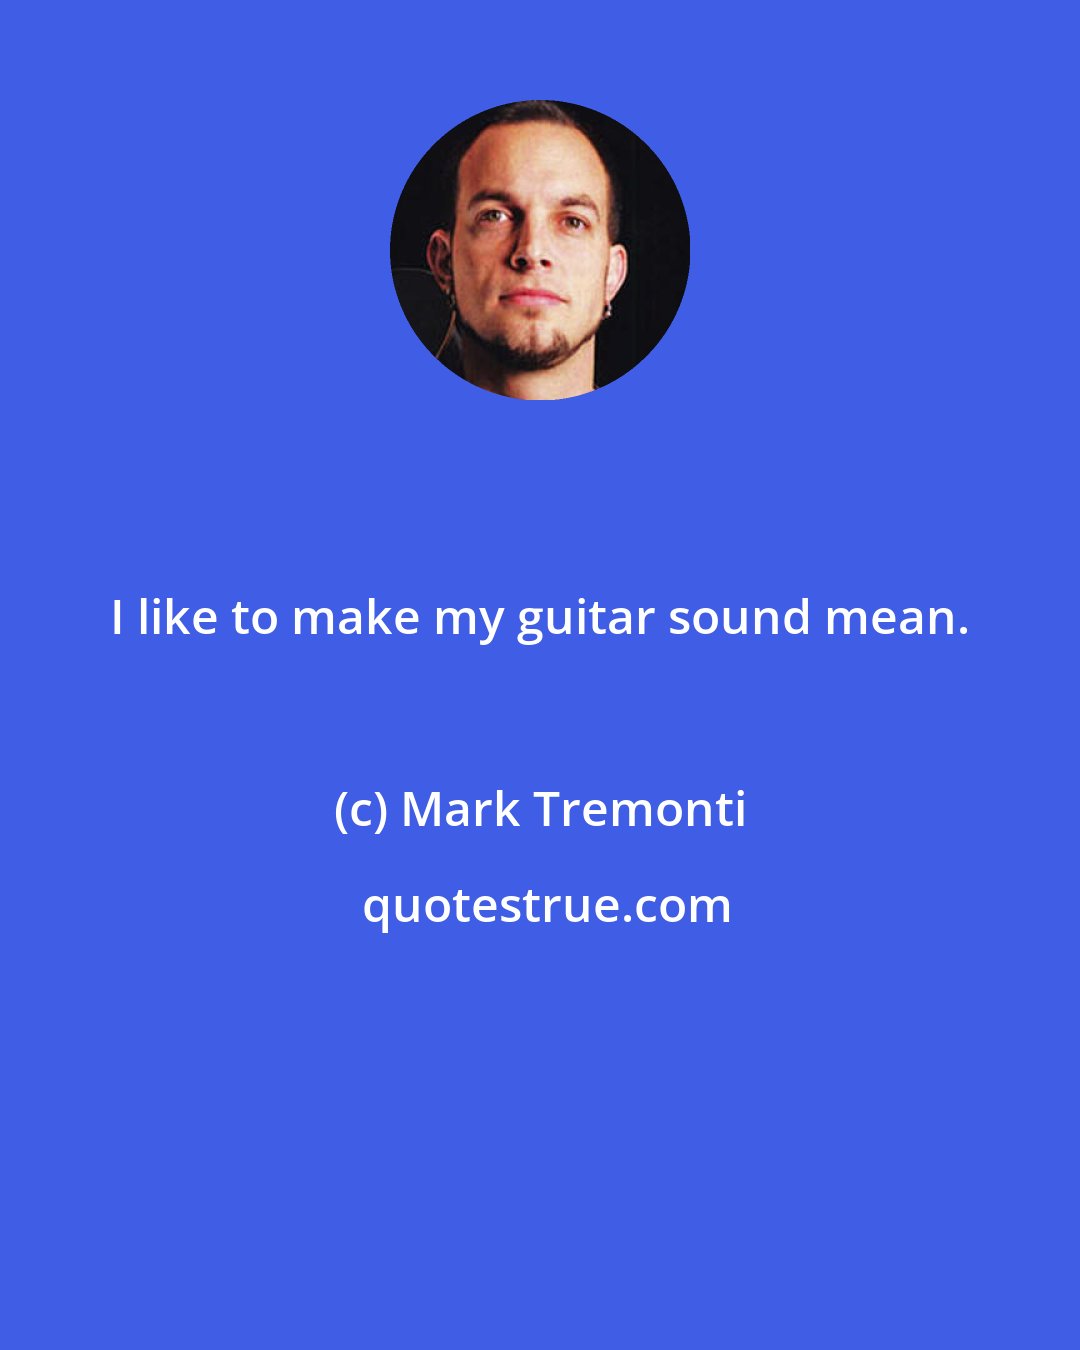 Mark Tremonti: I like to make my guitar sound mean.